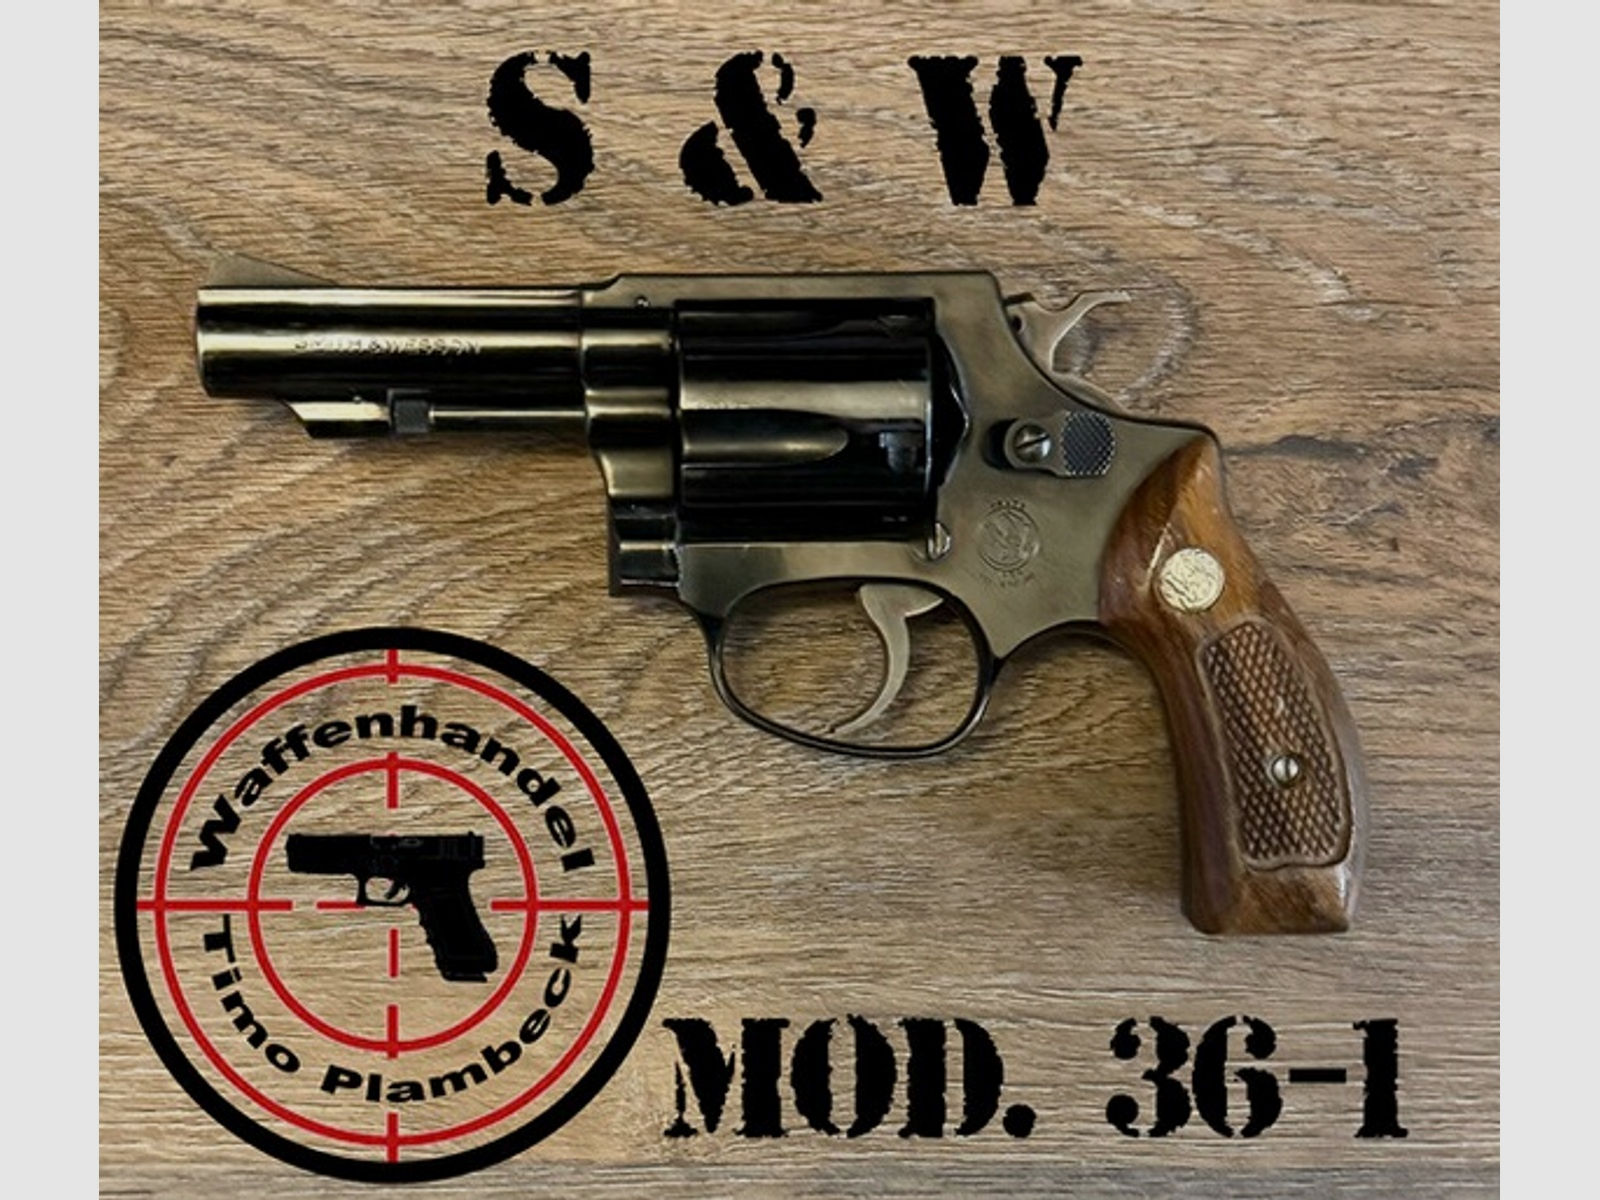 Revolver   Smith & Wesson   Modell 36-1   im Kaliber .38Special